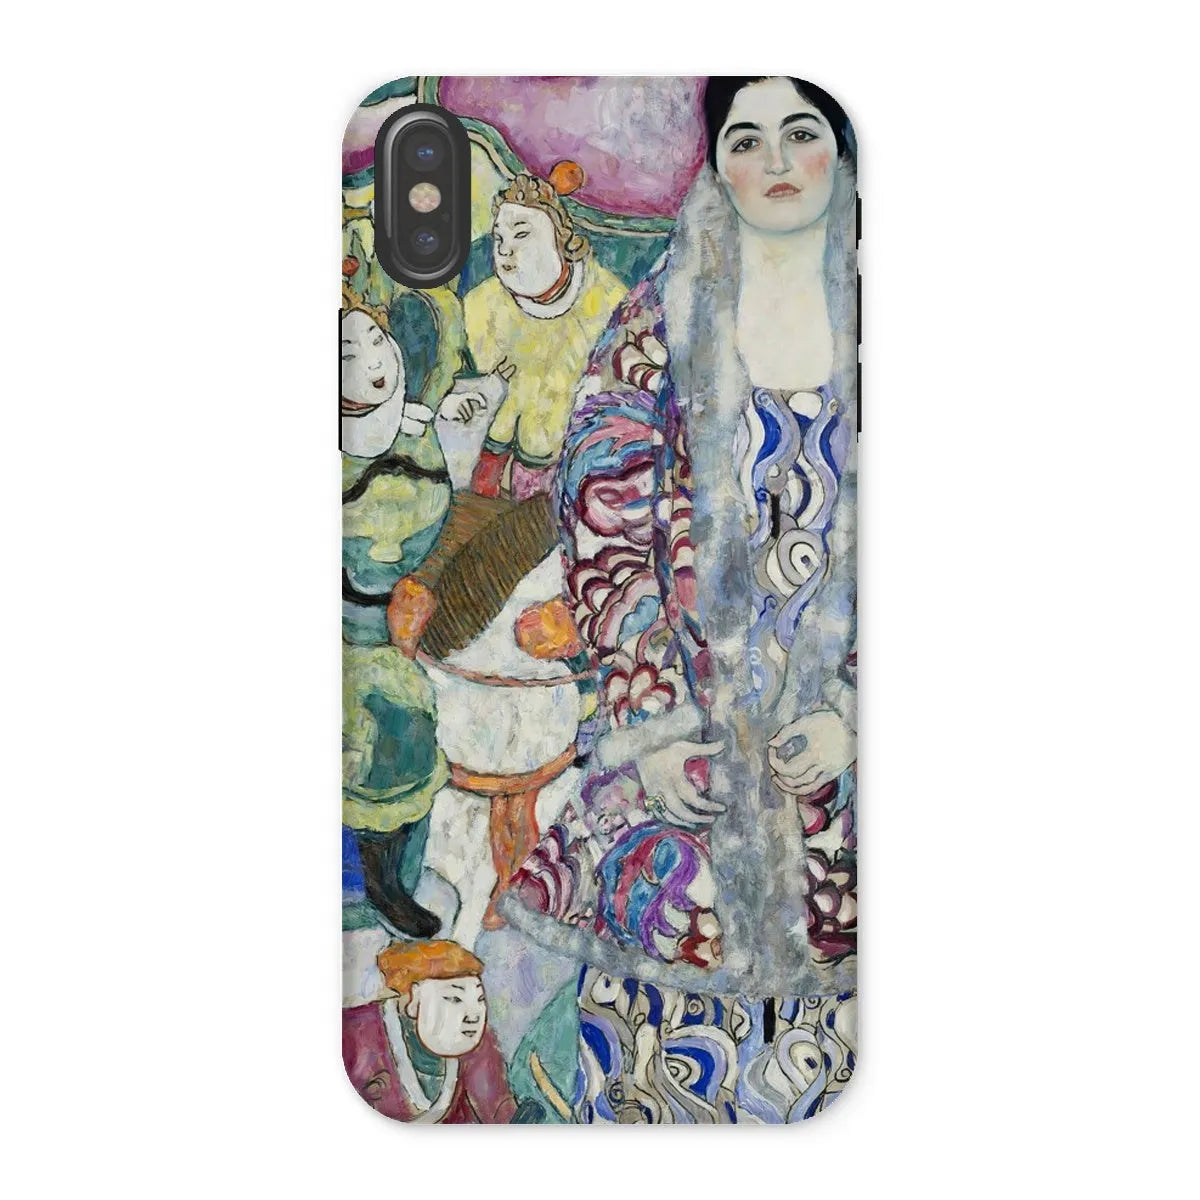 Friederike Maria Beer - Viennese Art Phone Case - Gustav Klimt - Iphone x / Matte - Mobile Phone Cases - Aesthetic Art